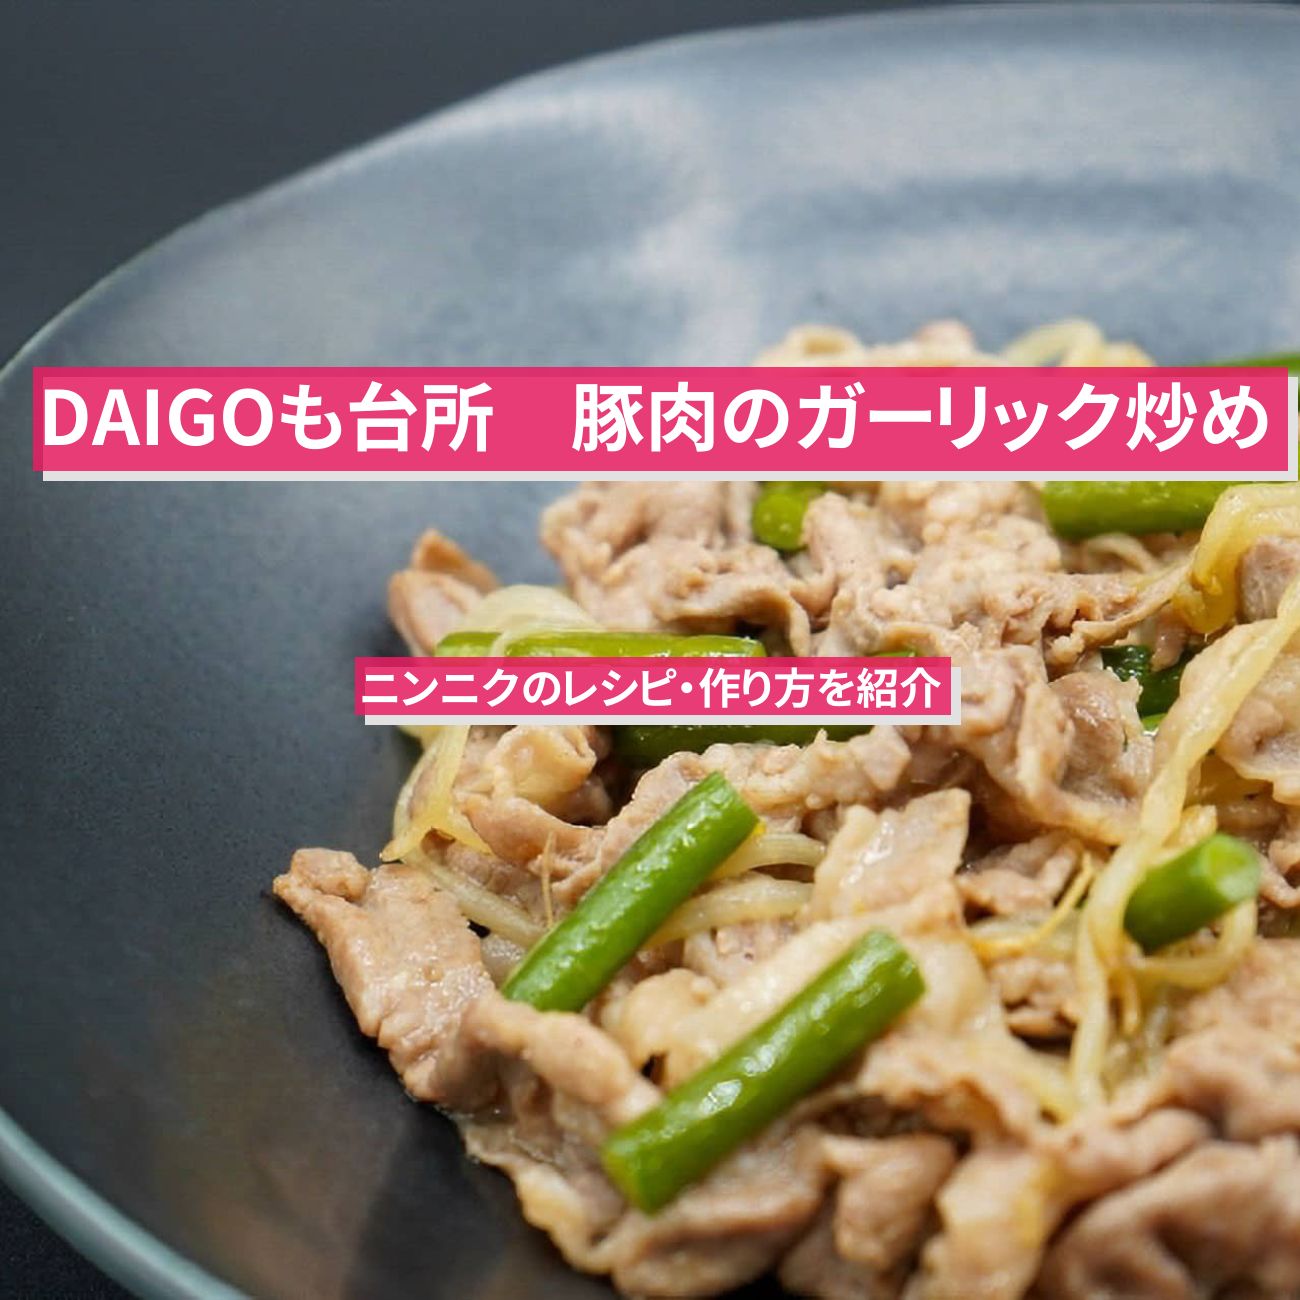 【DAIGOも台所】にんにくの芽で『豚肉のガーリック炒め』のレシピ・作り方を紹介